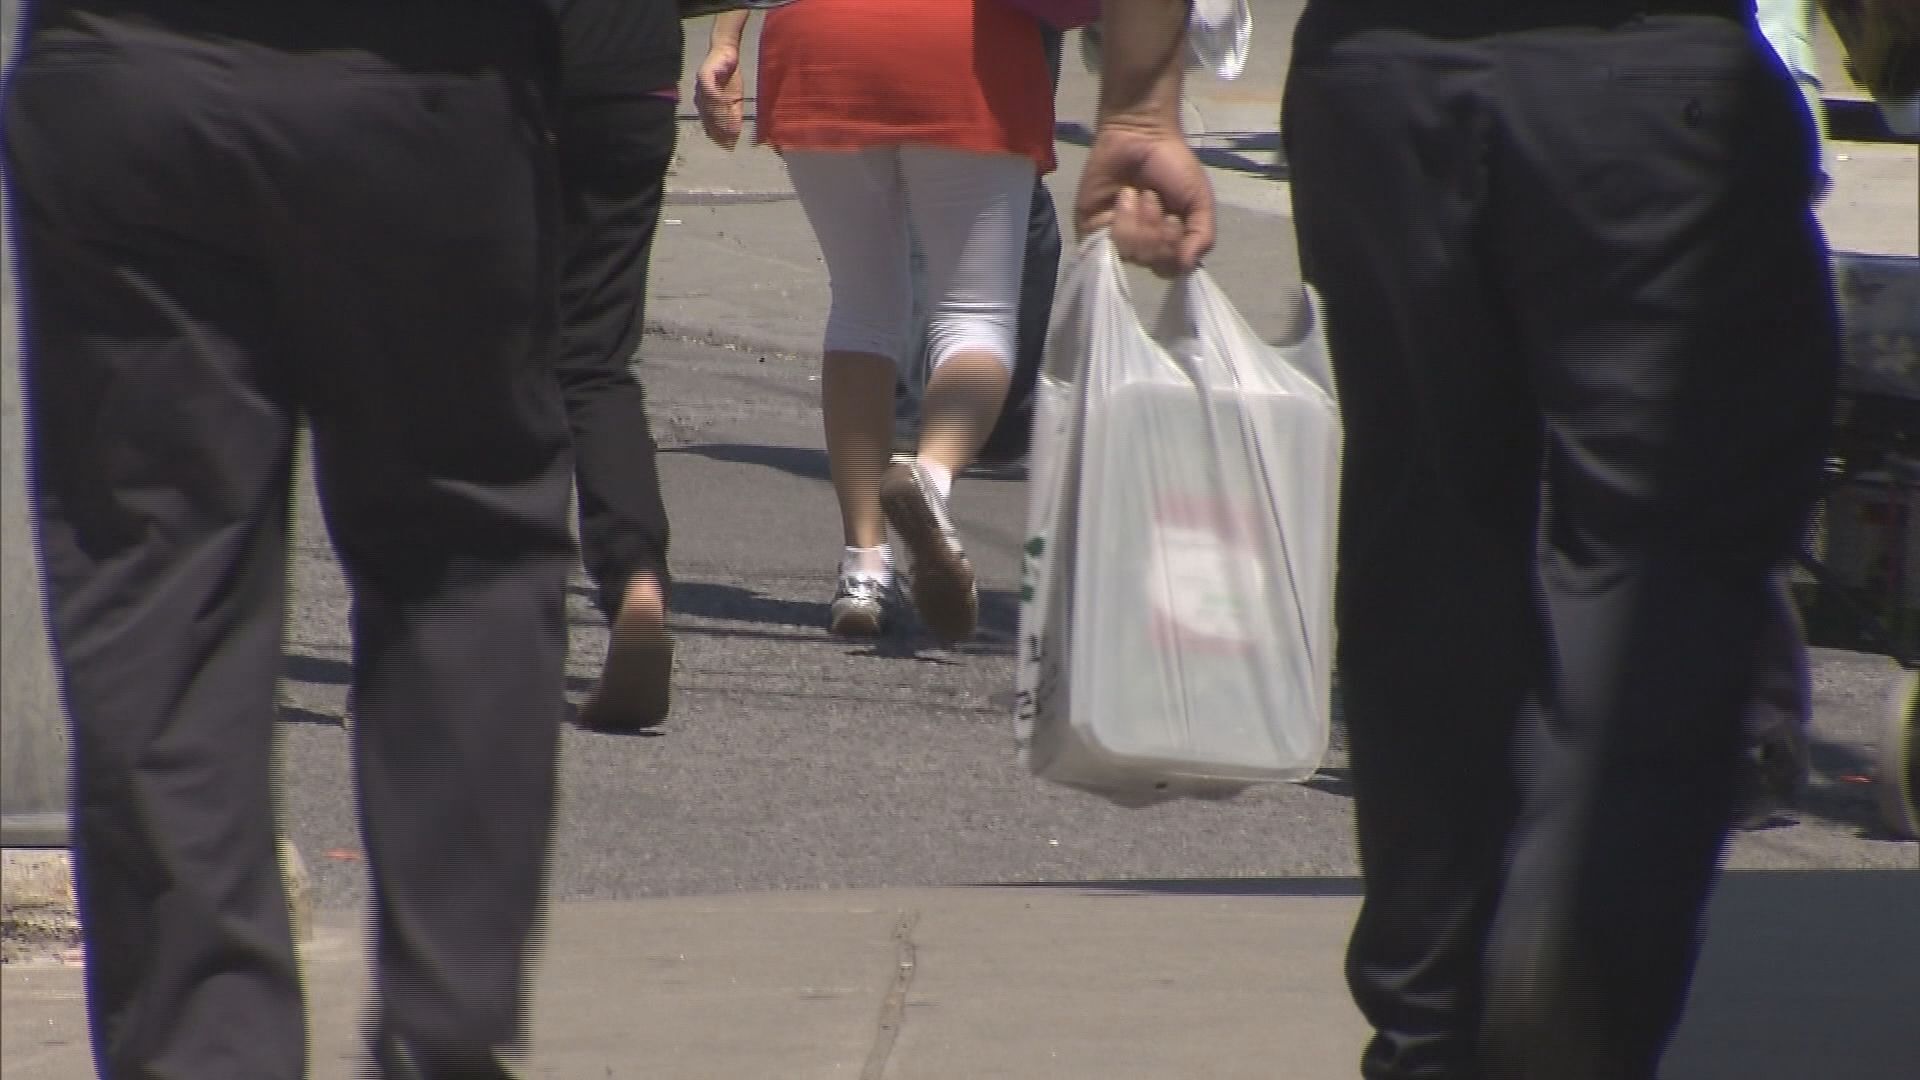 Health Canada apologizes, says body bags were 'routine restocking